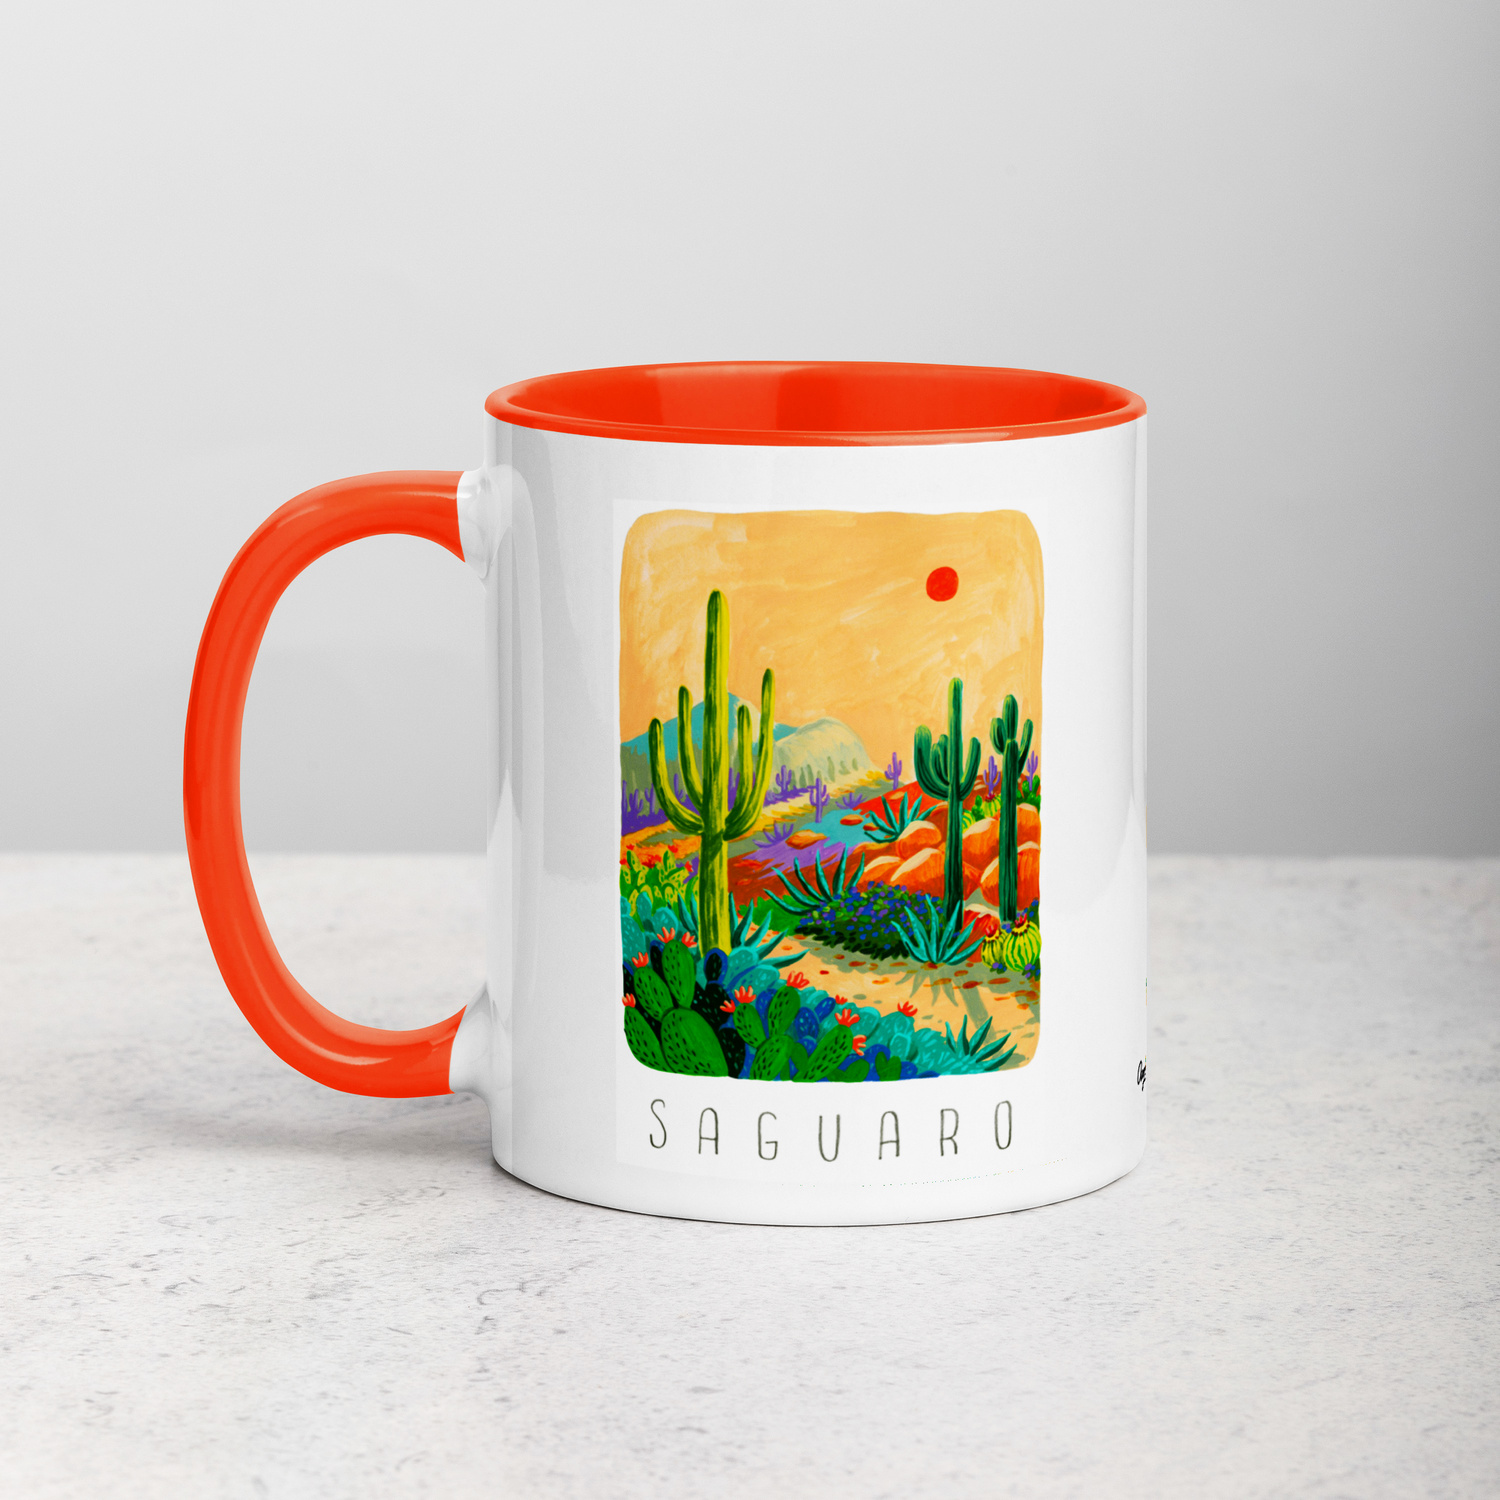 White ceramic coffee mug with orange handle and inside; has Saguaro National Park illustration by Angela Staehling